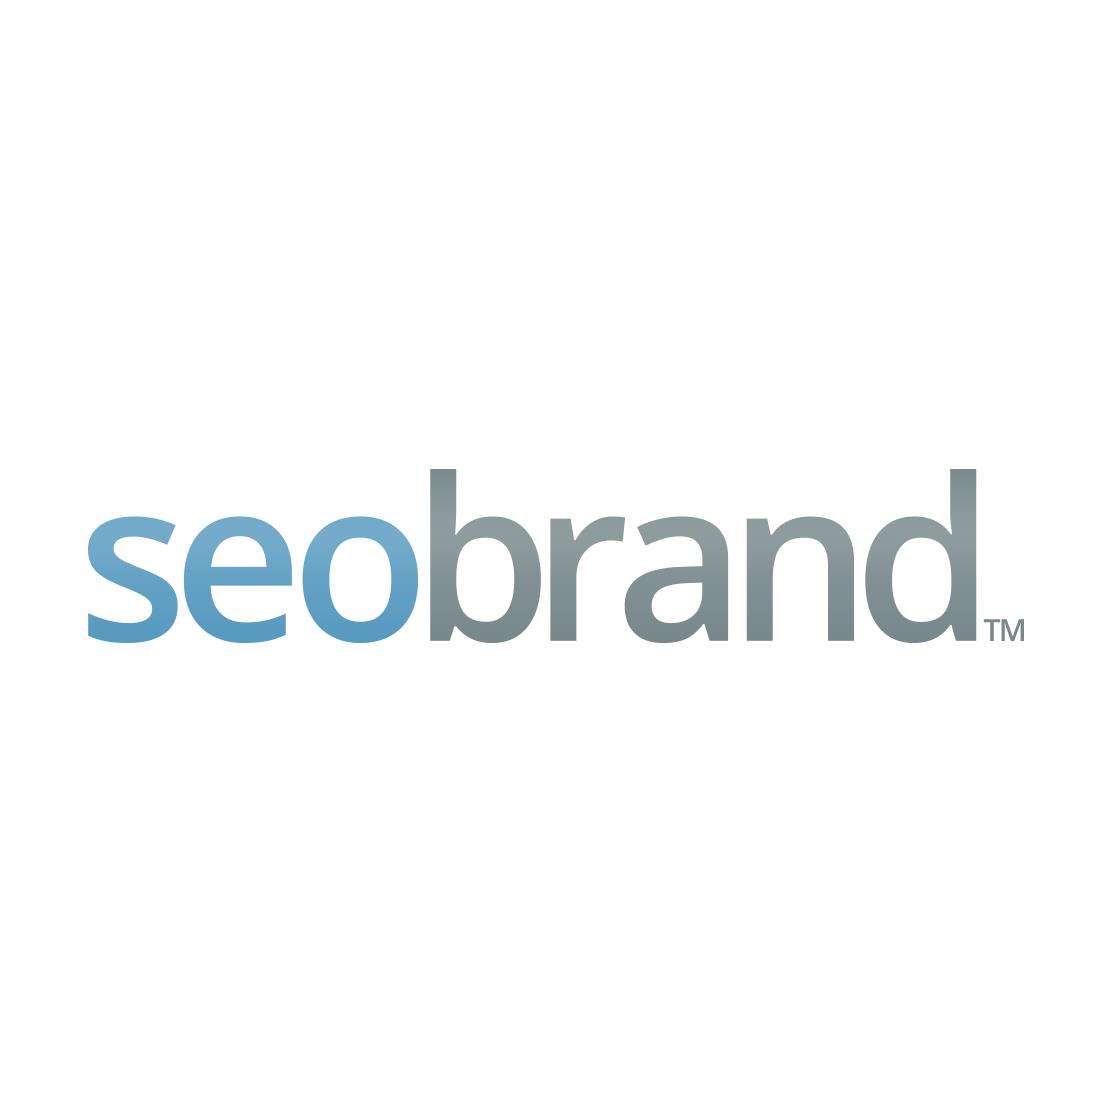 Top Boston SEO Business Logo: SEO Brand